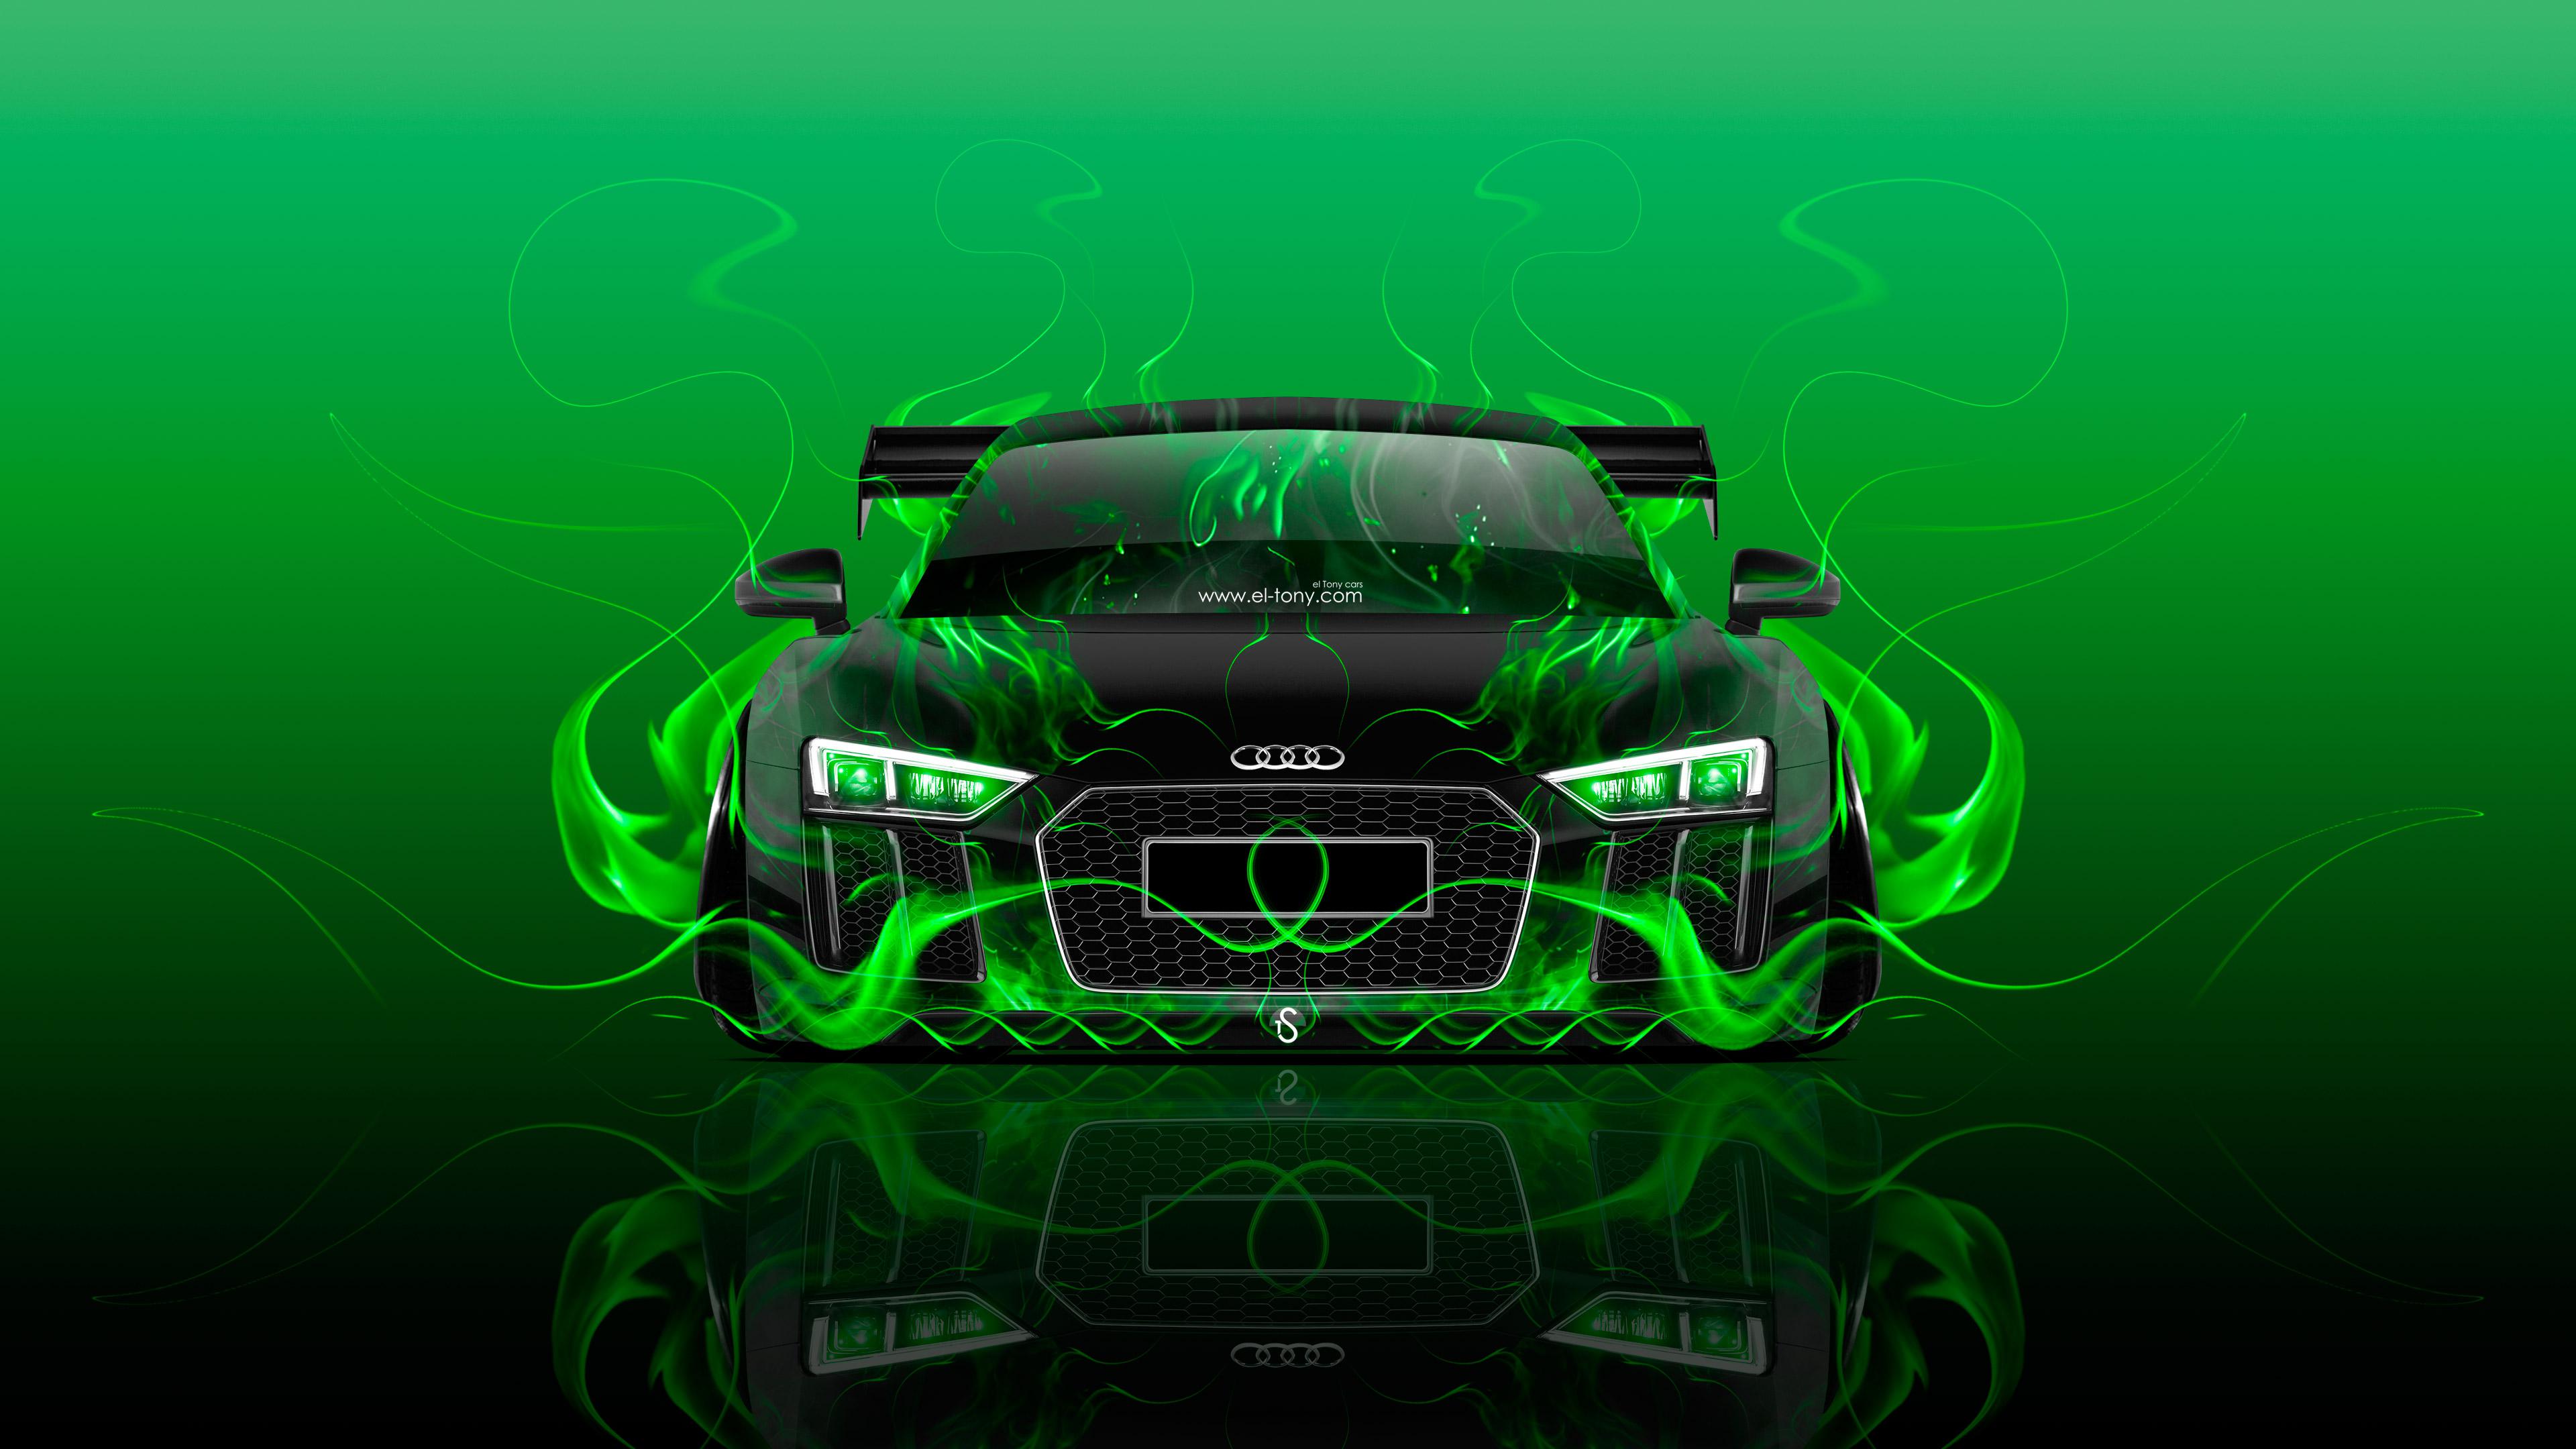 SG- Green car. popular cashadvance6online.com